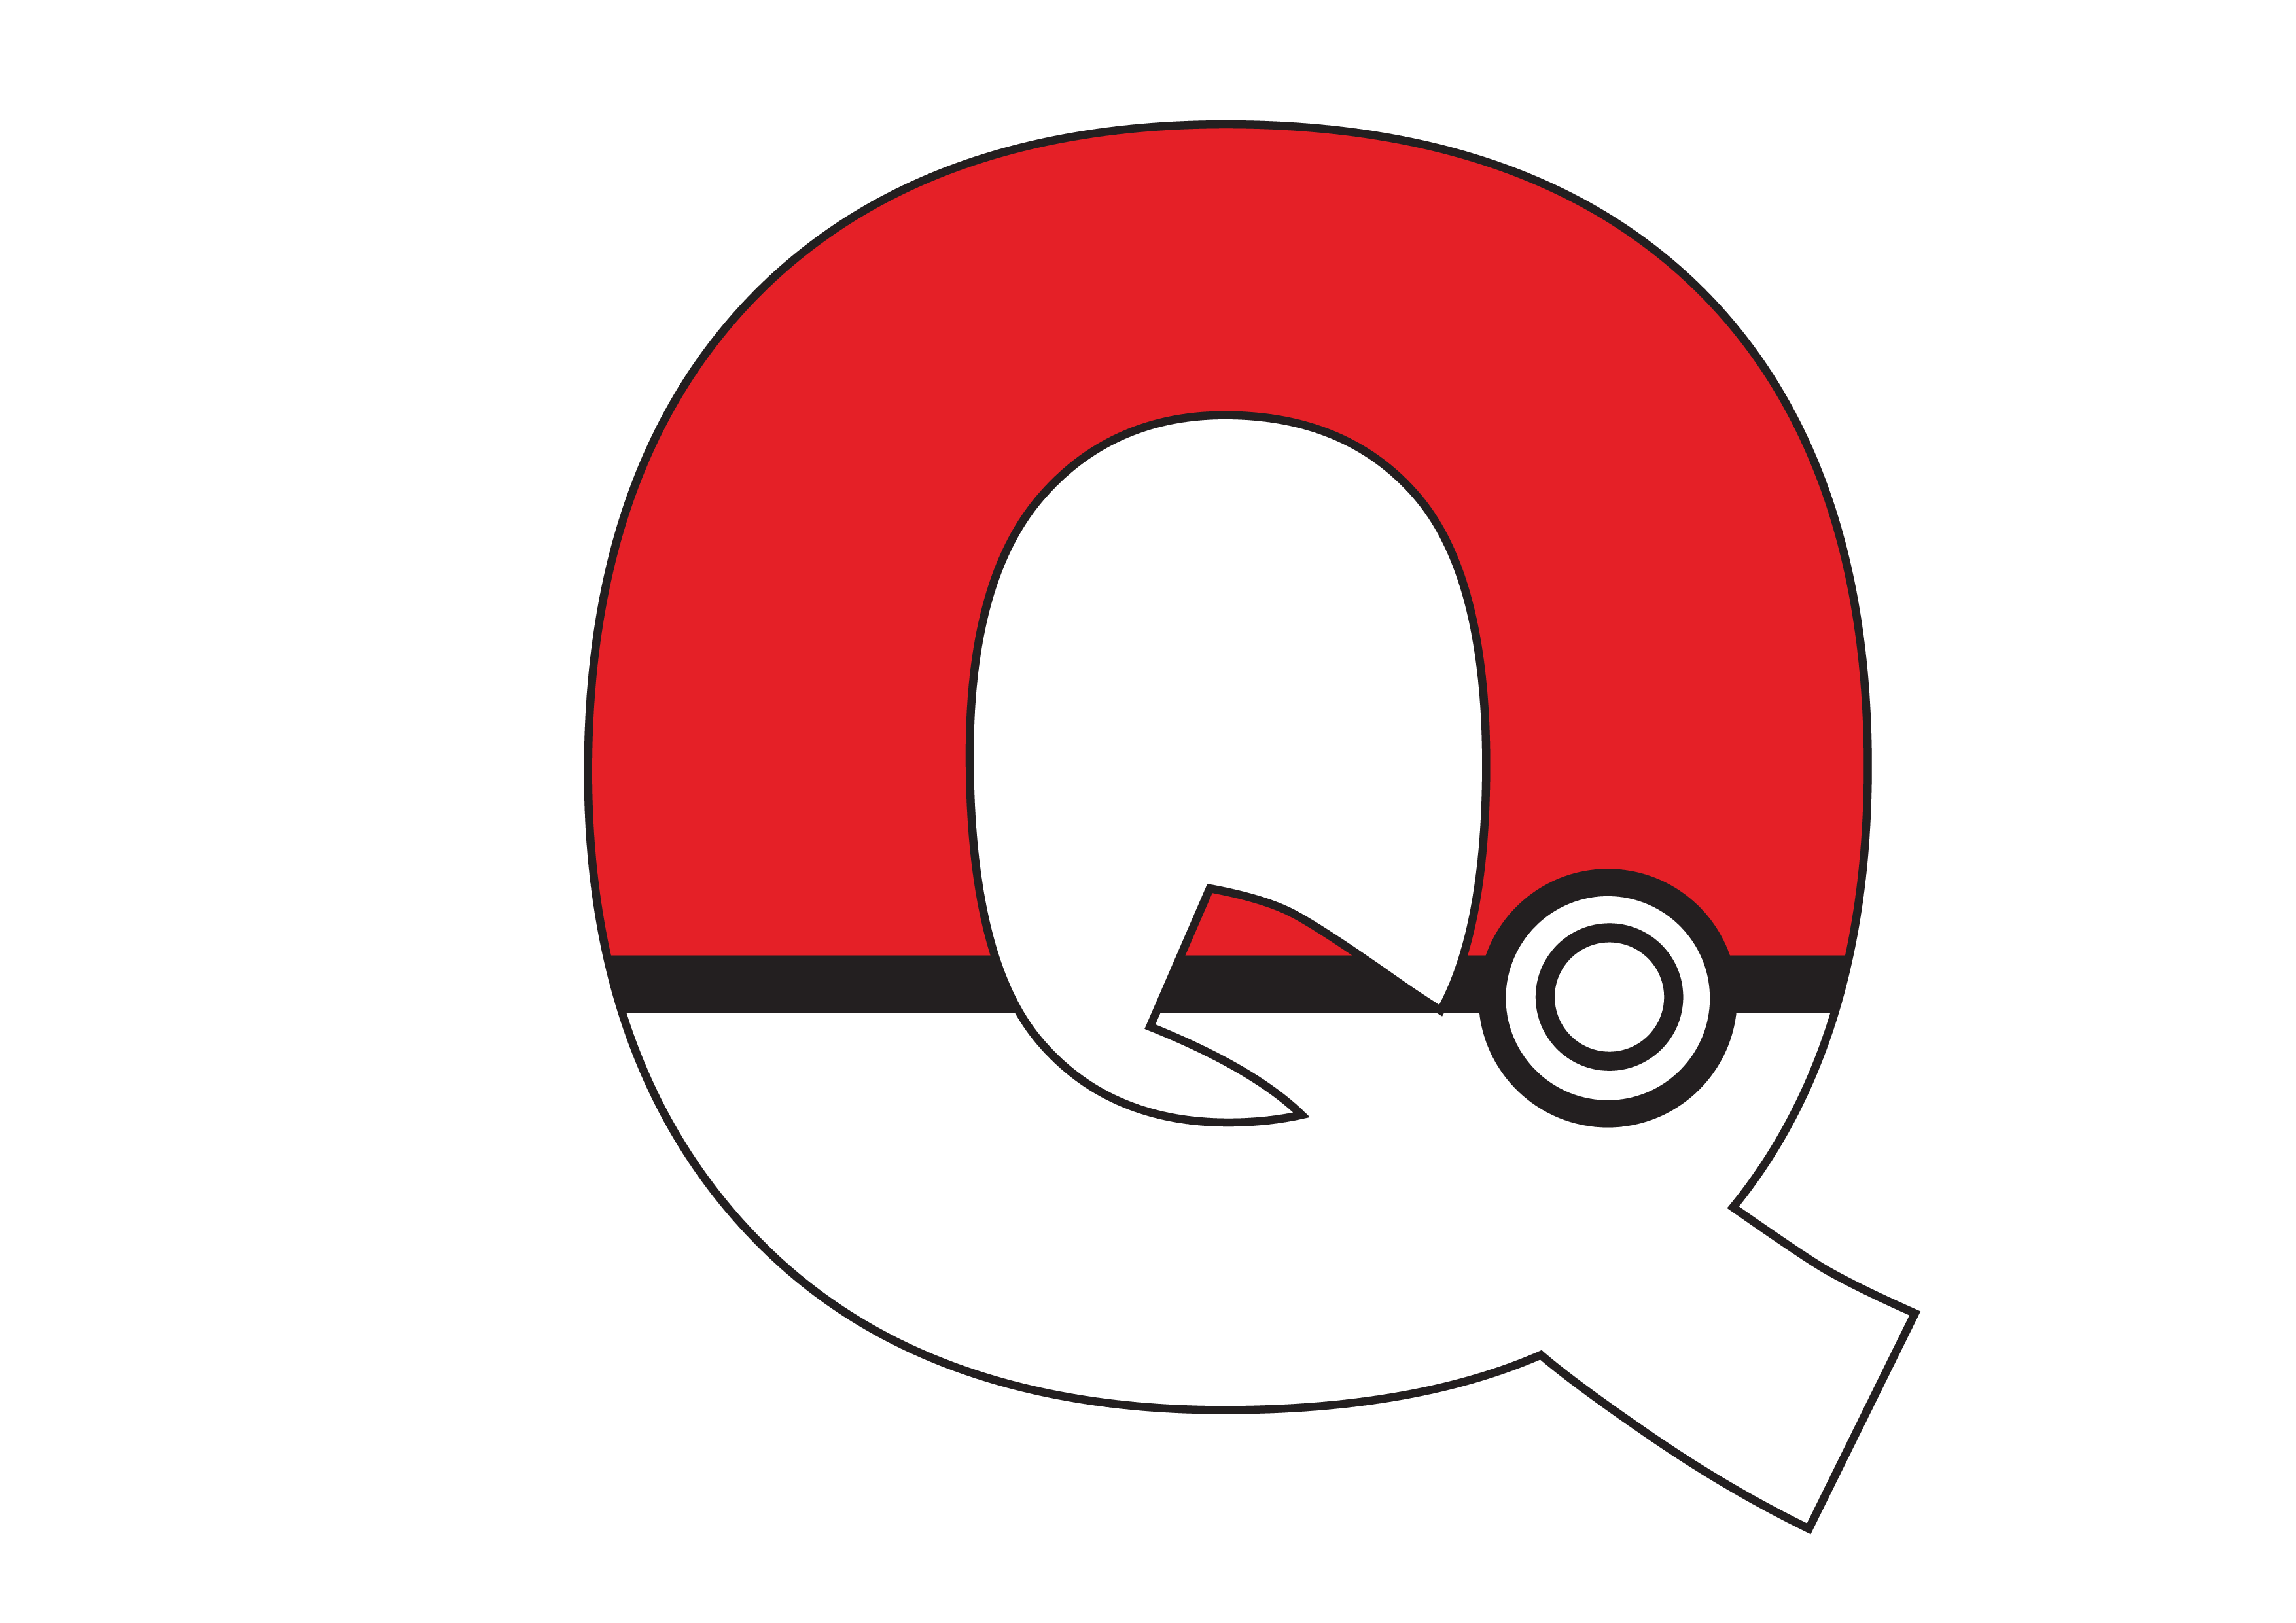 letra Q Pokemon